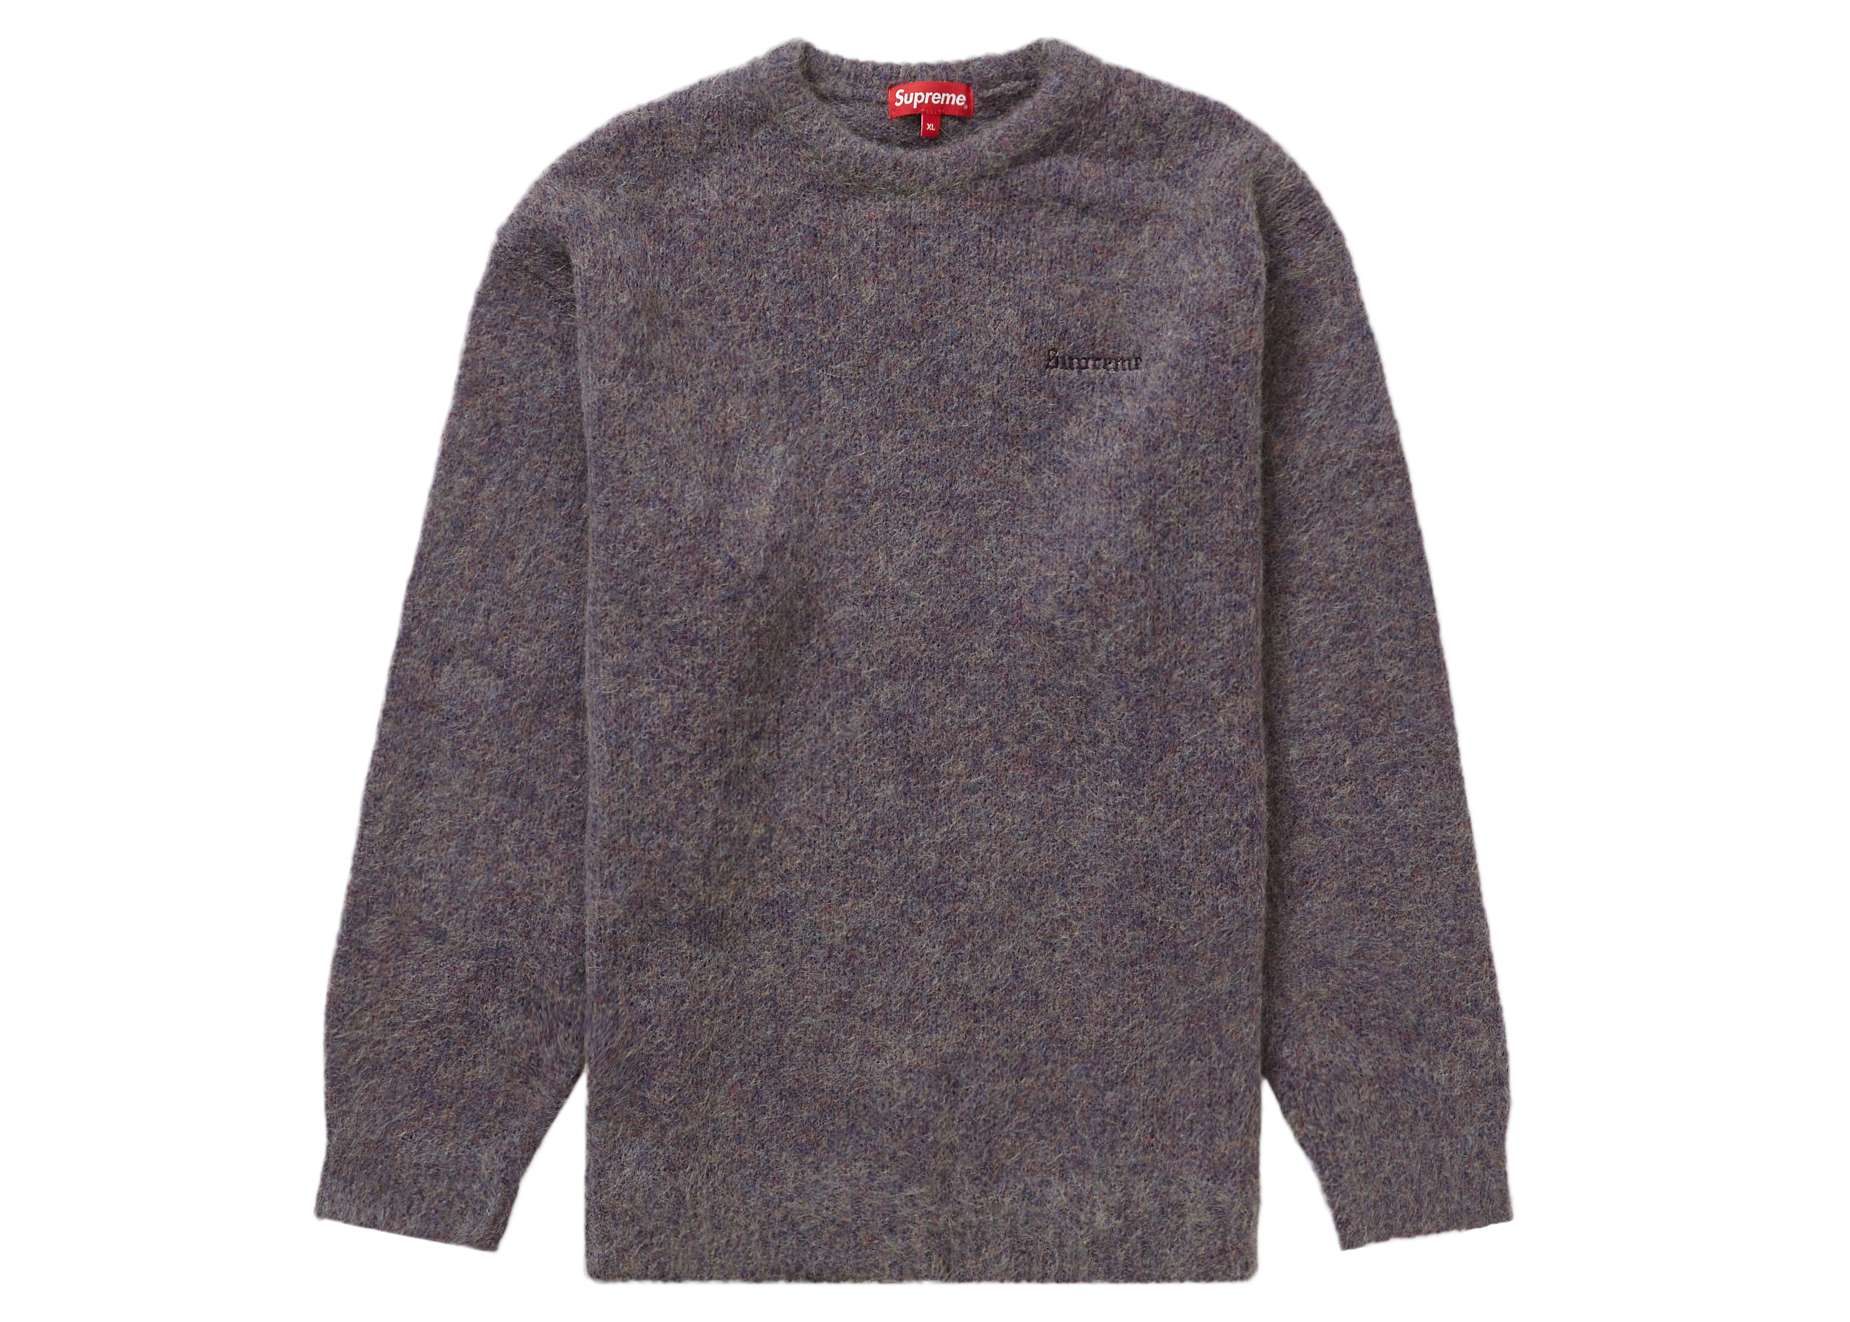 colosupreme Mohair Sweater